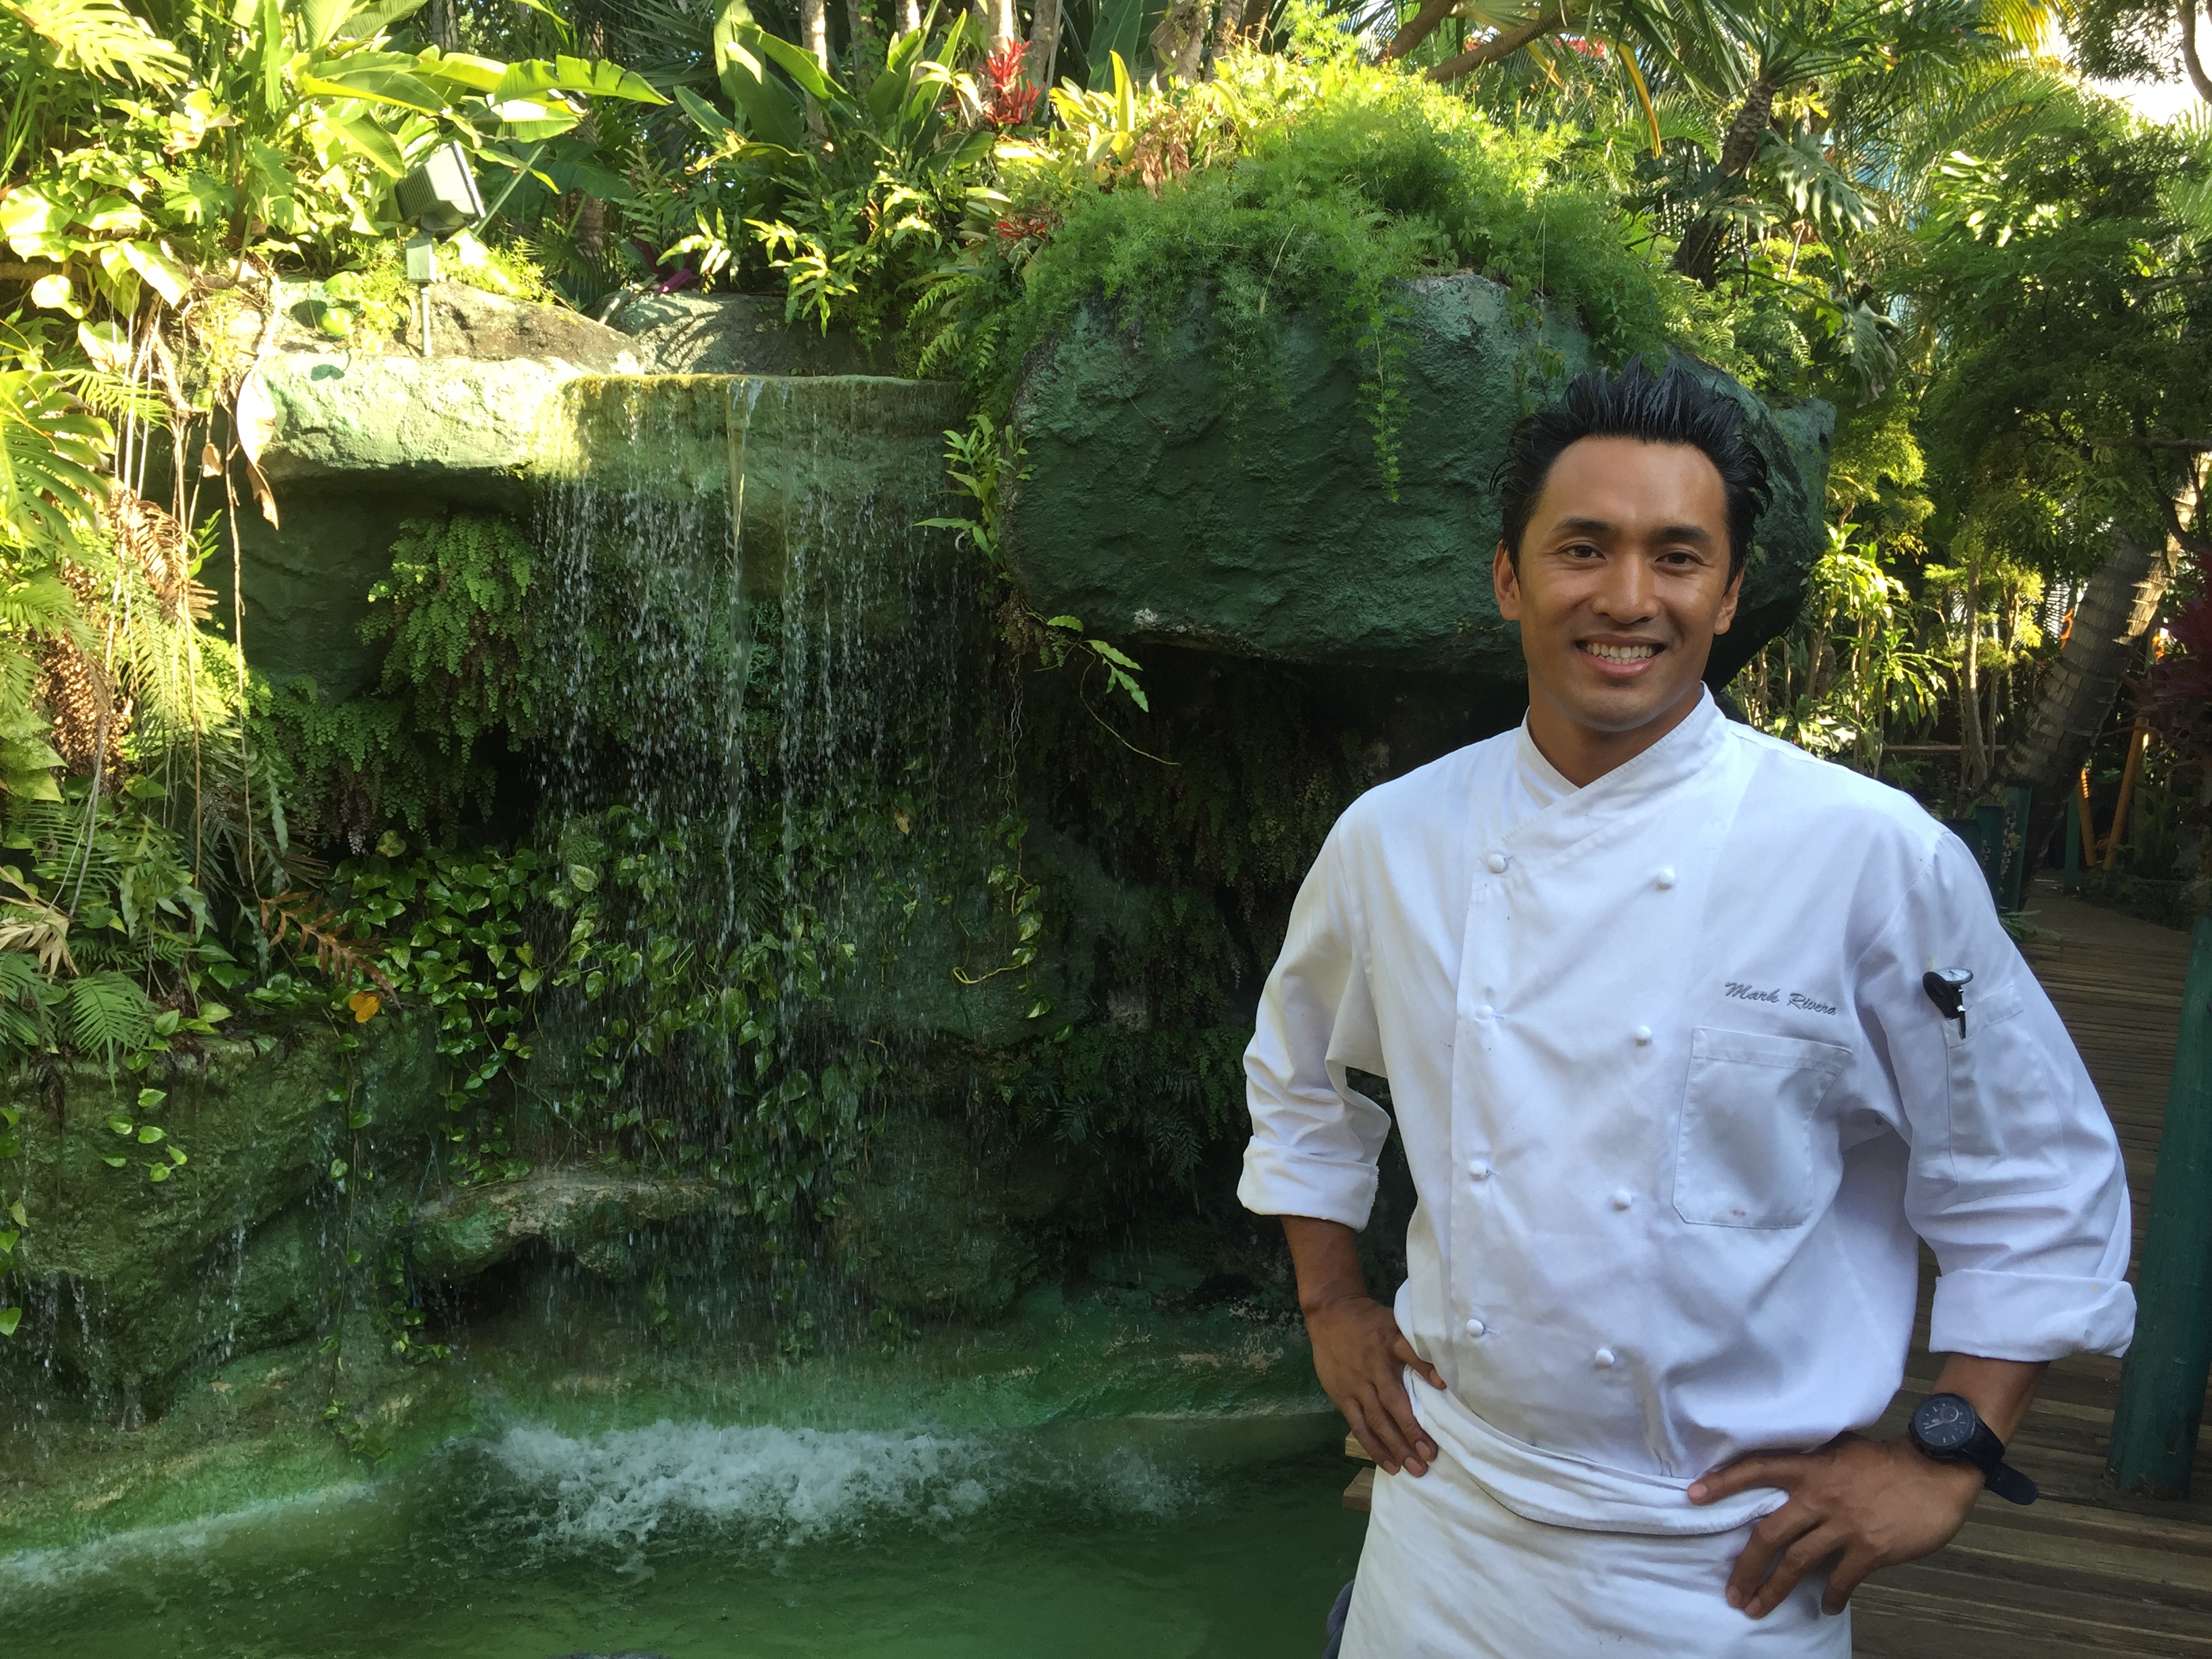 Chef Mark Rivera in the Beautiful Mai-Kai Gardens